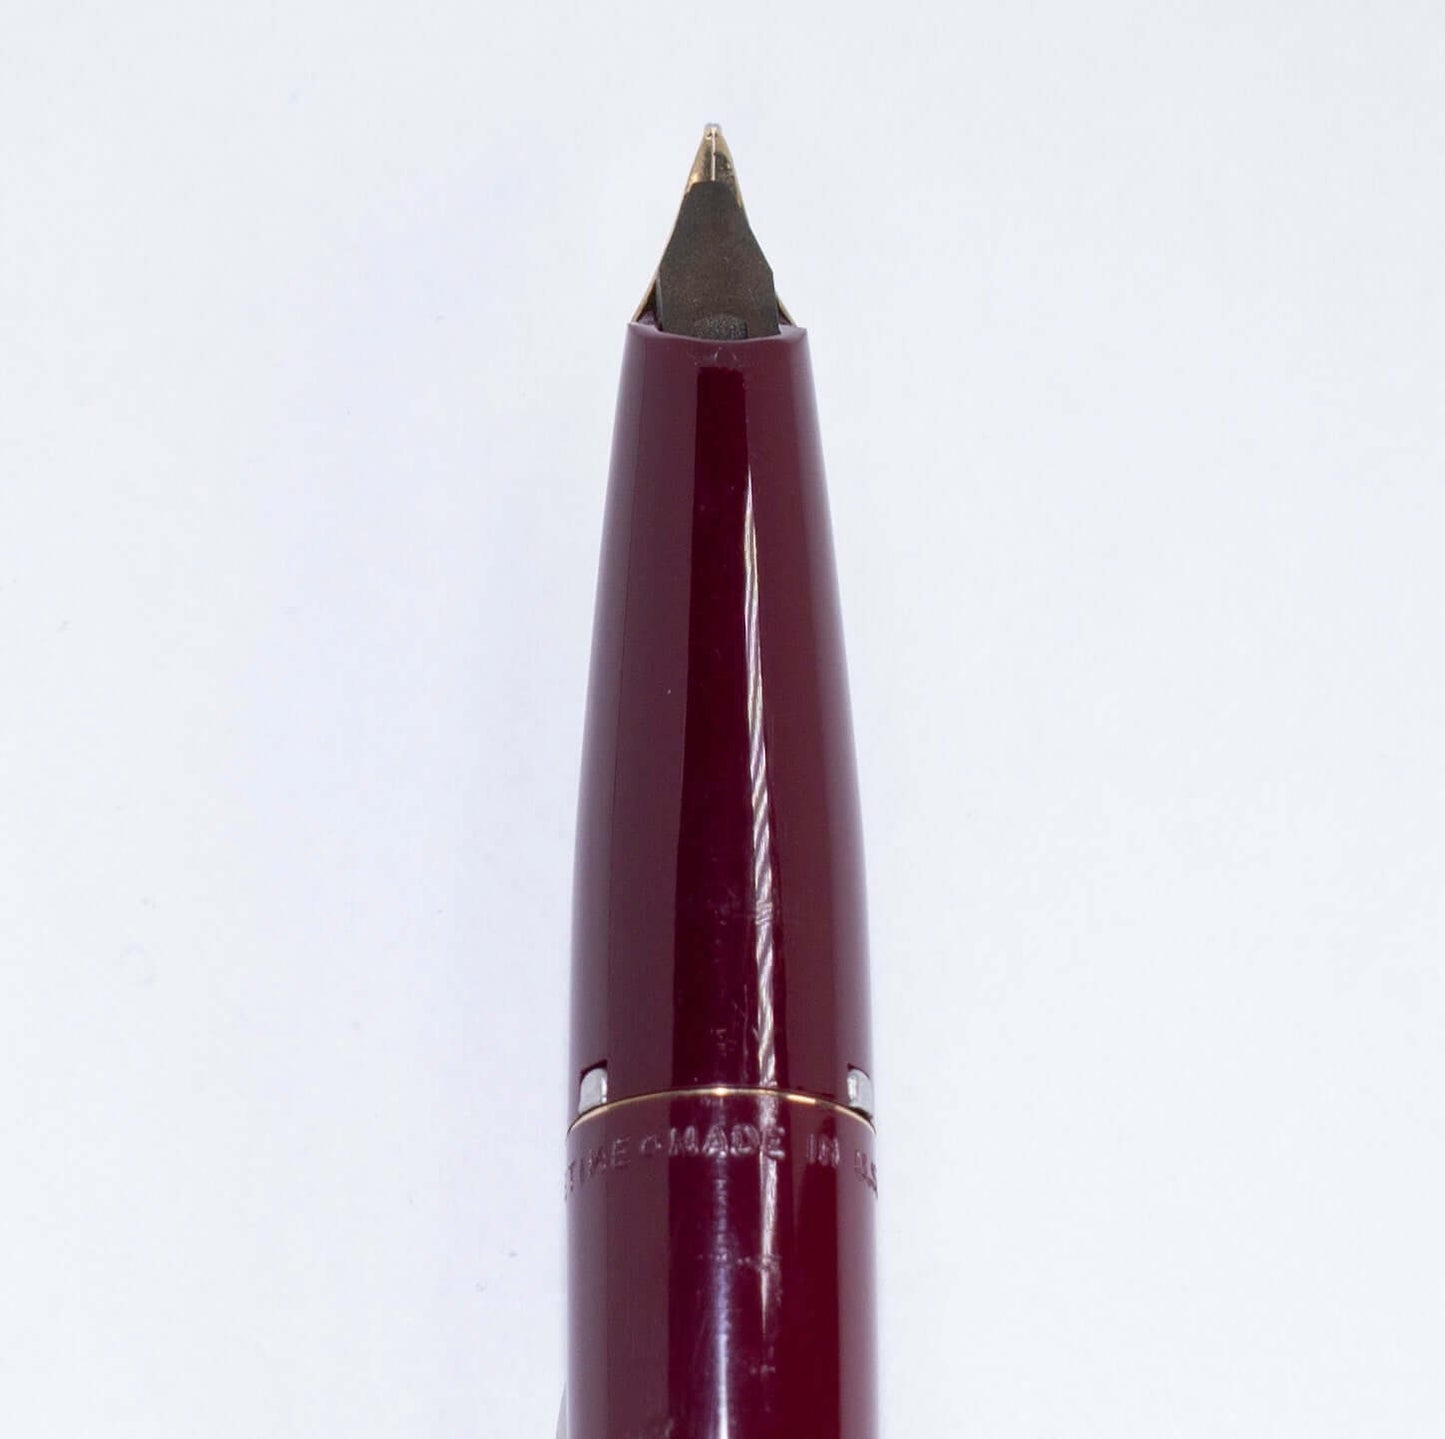 1963 Sheaffer Lifetime Imperial Fountain Pen, Burgundy, Two-Tone Cap, 14K inlay nib.